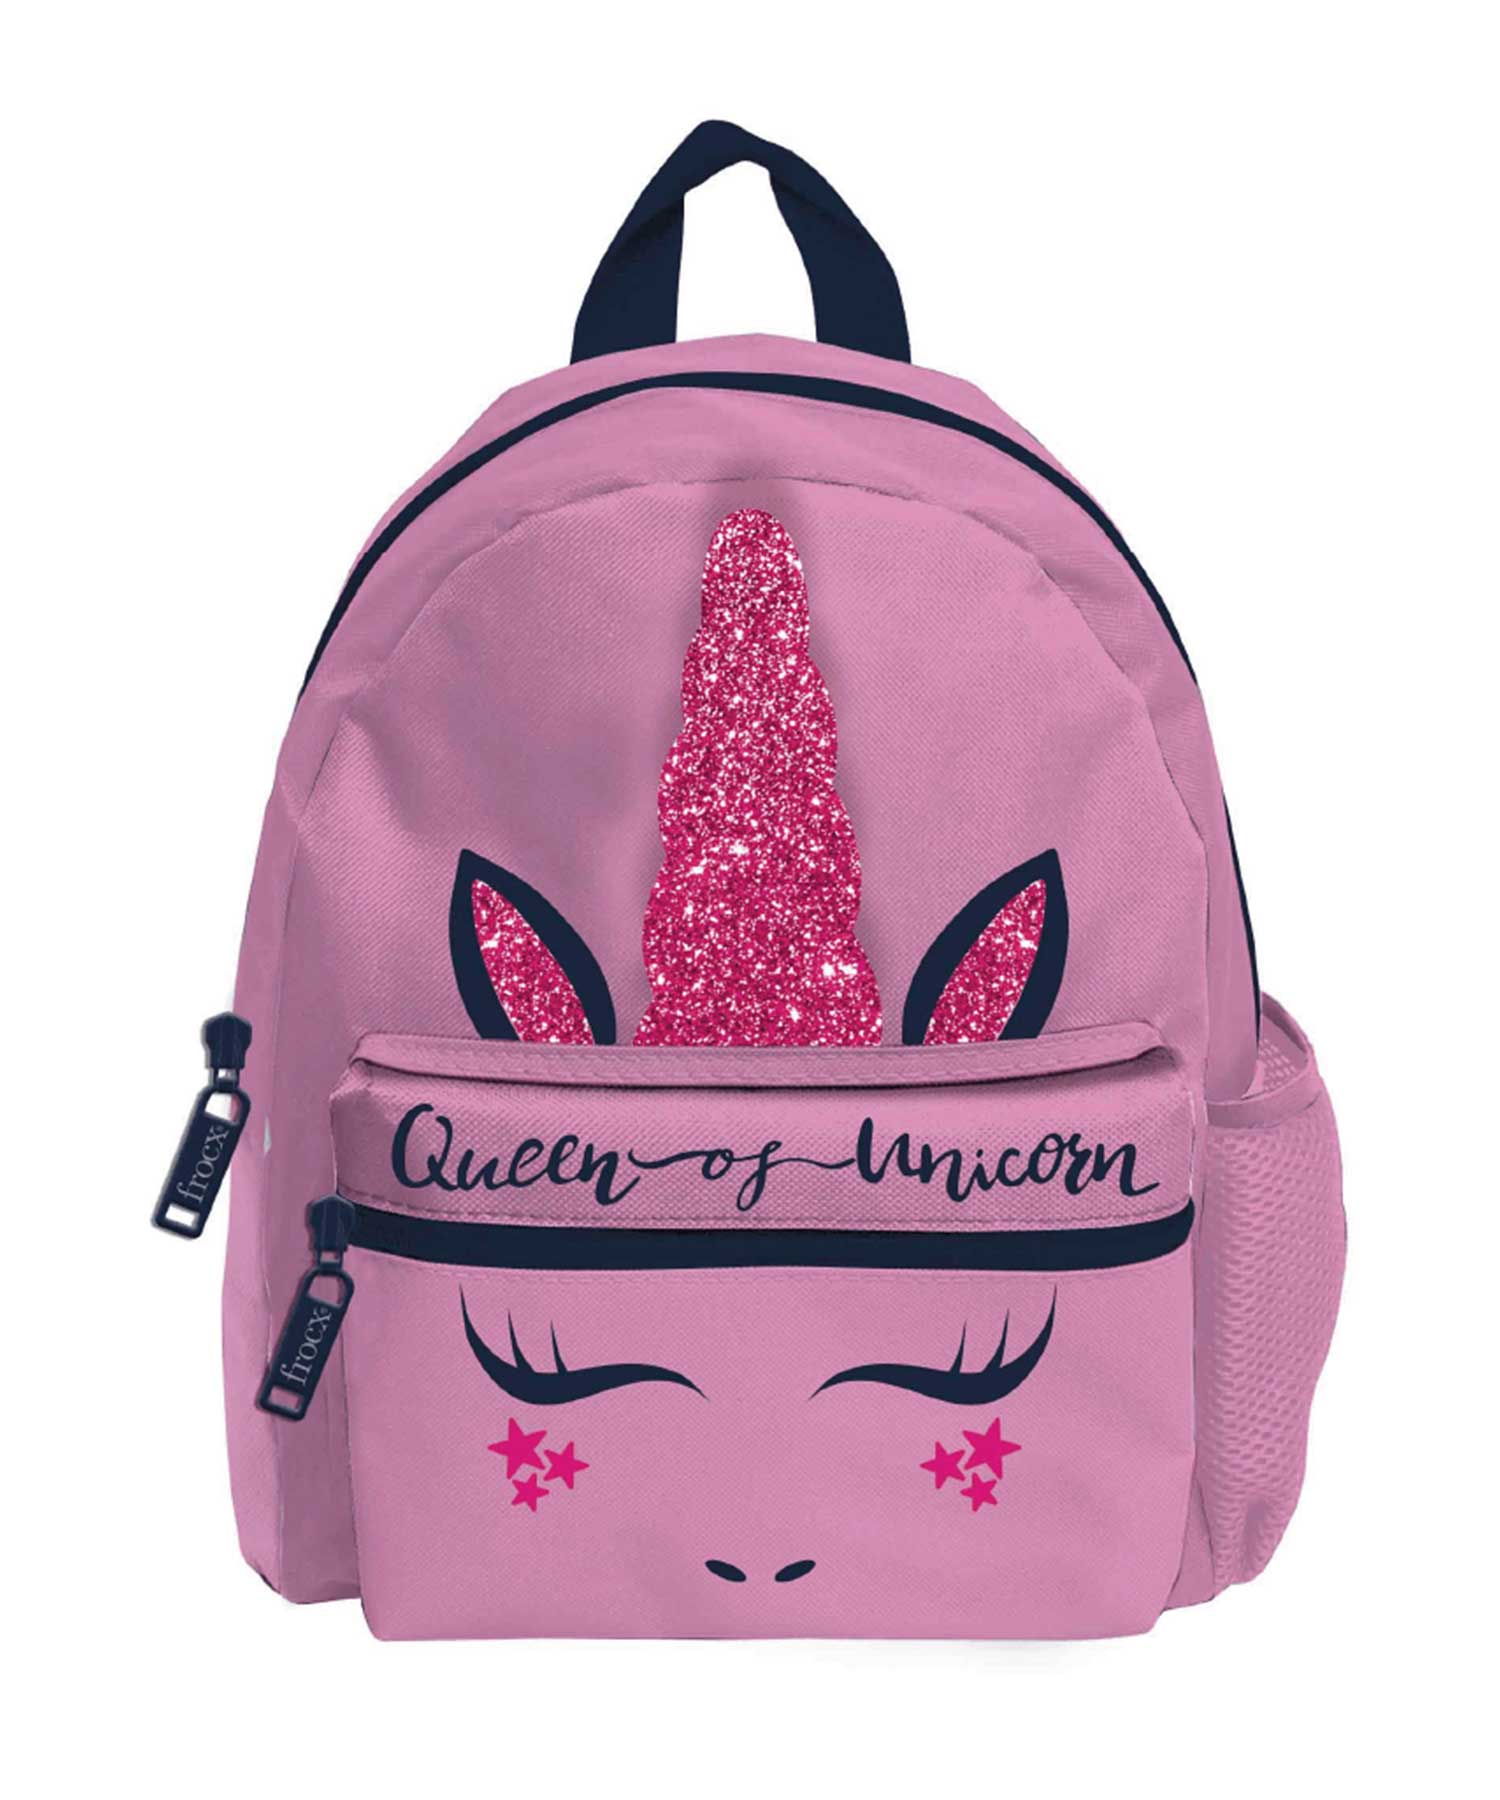 Renkli Kız Çocuk Frocx Loop Queen Of Unicorn Anaokulu Çantası 422